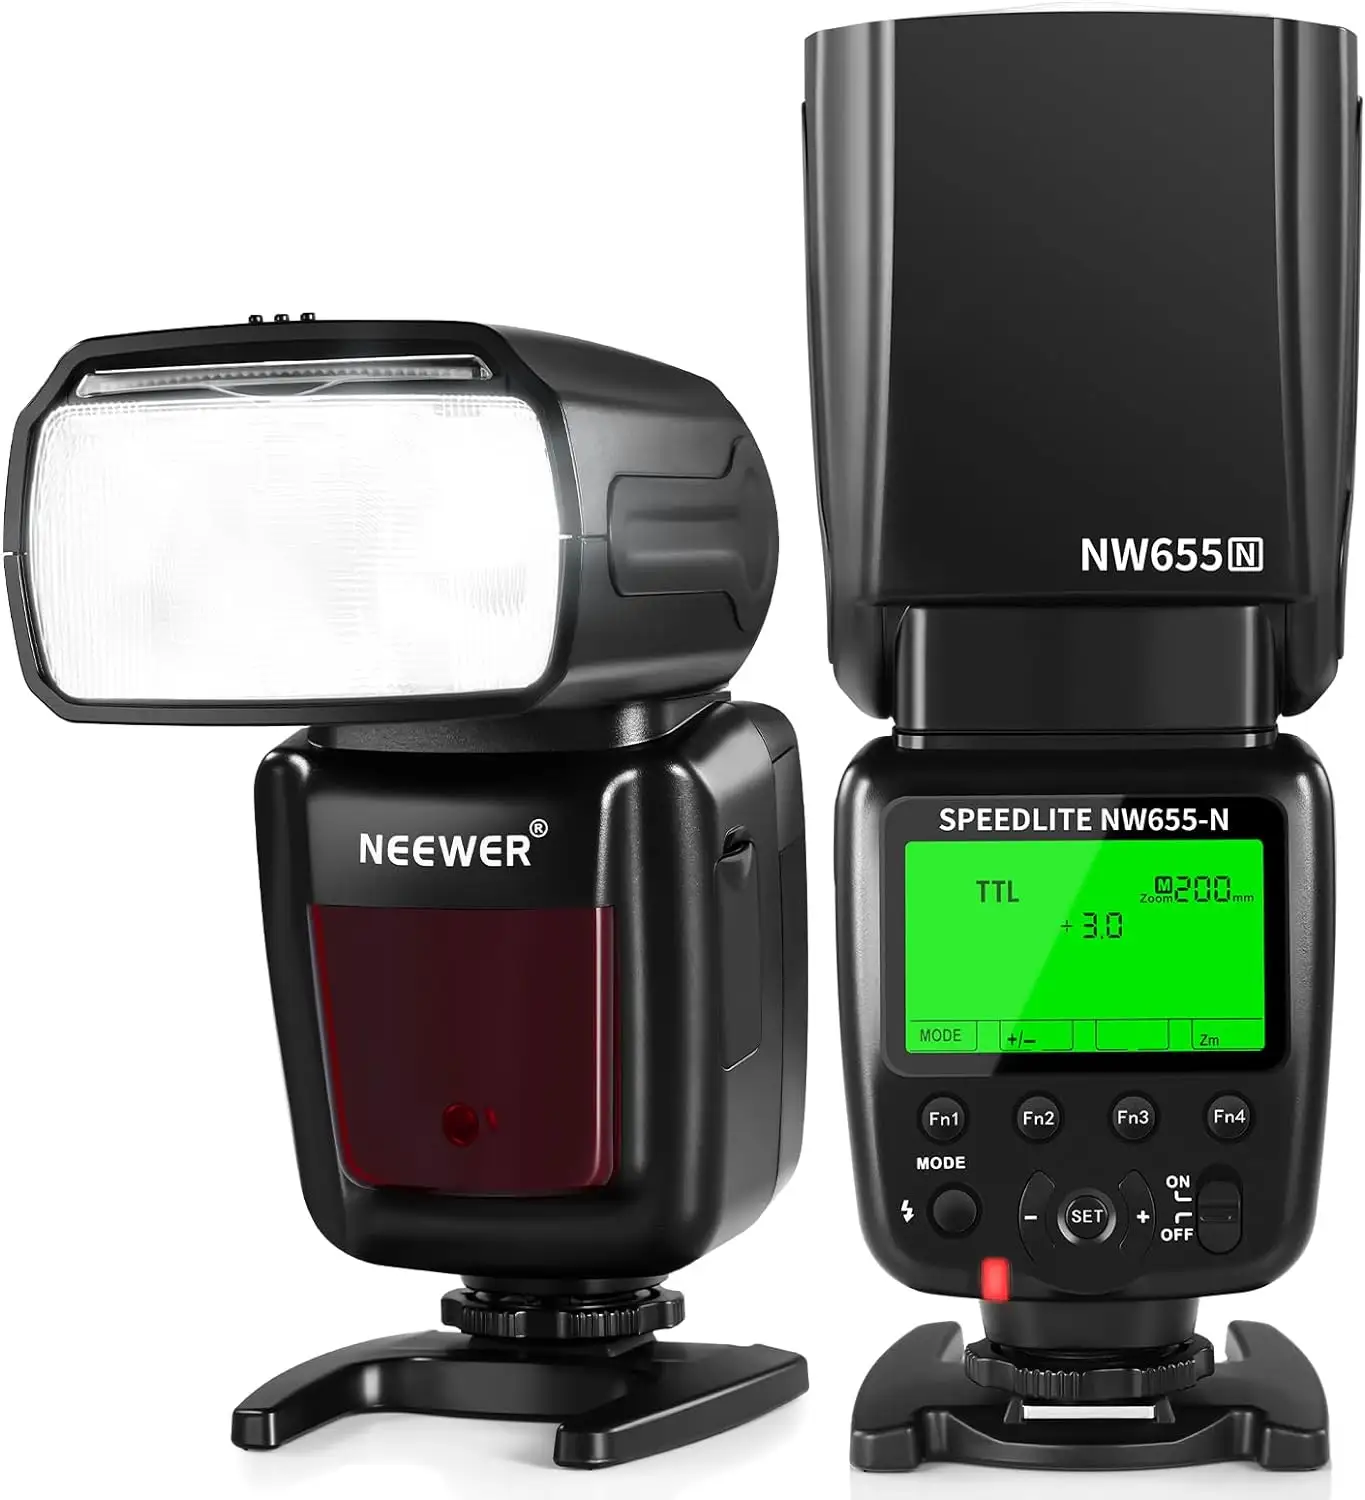 NEEWER NW655-N TTL Speedlite Flash fotografi, lampu kilat studio cocok dengan Nikon Speedlight untuk kamera DSLR